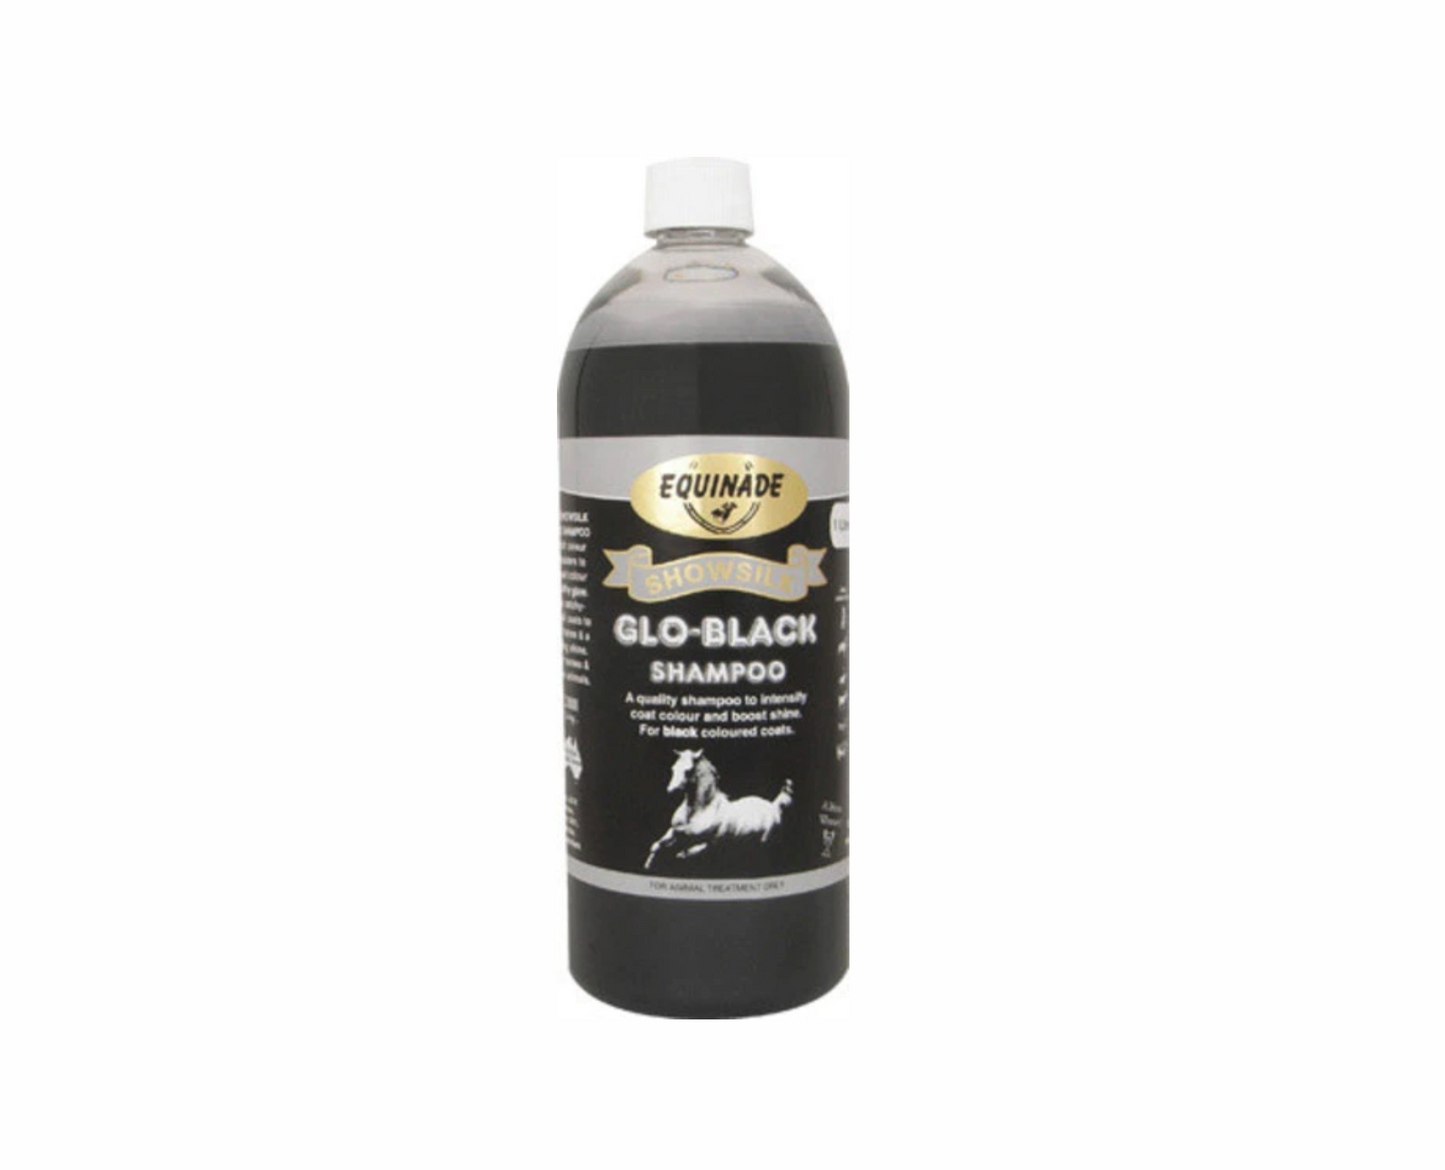 Equinade Glo-Black Shampoo